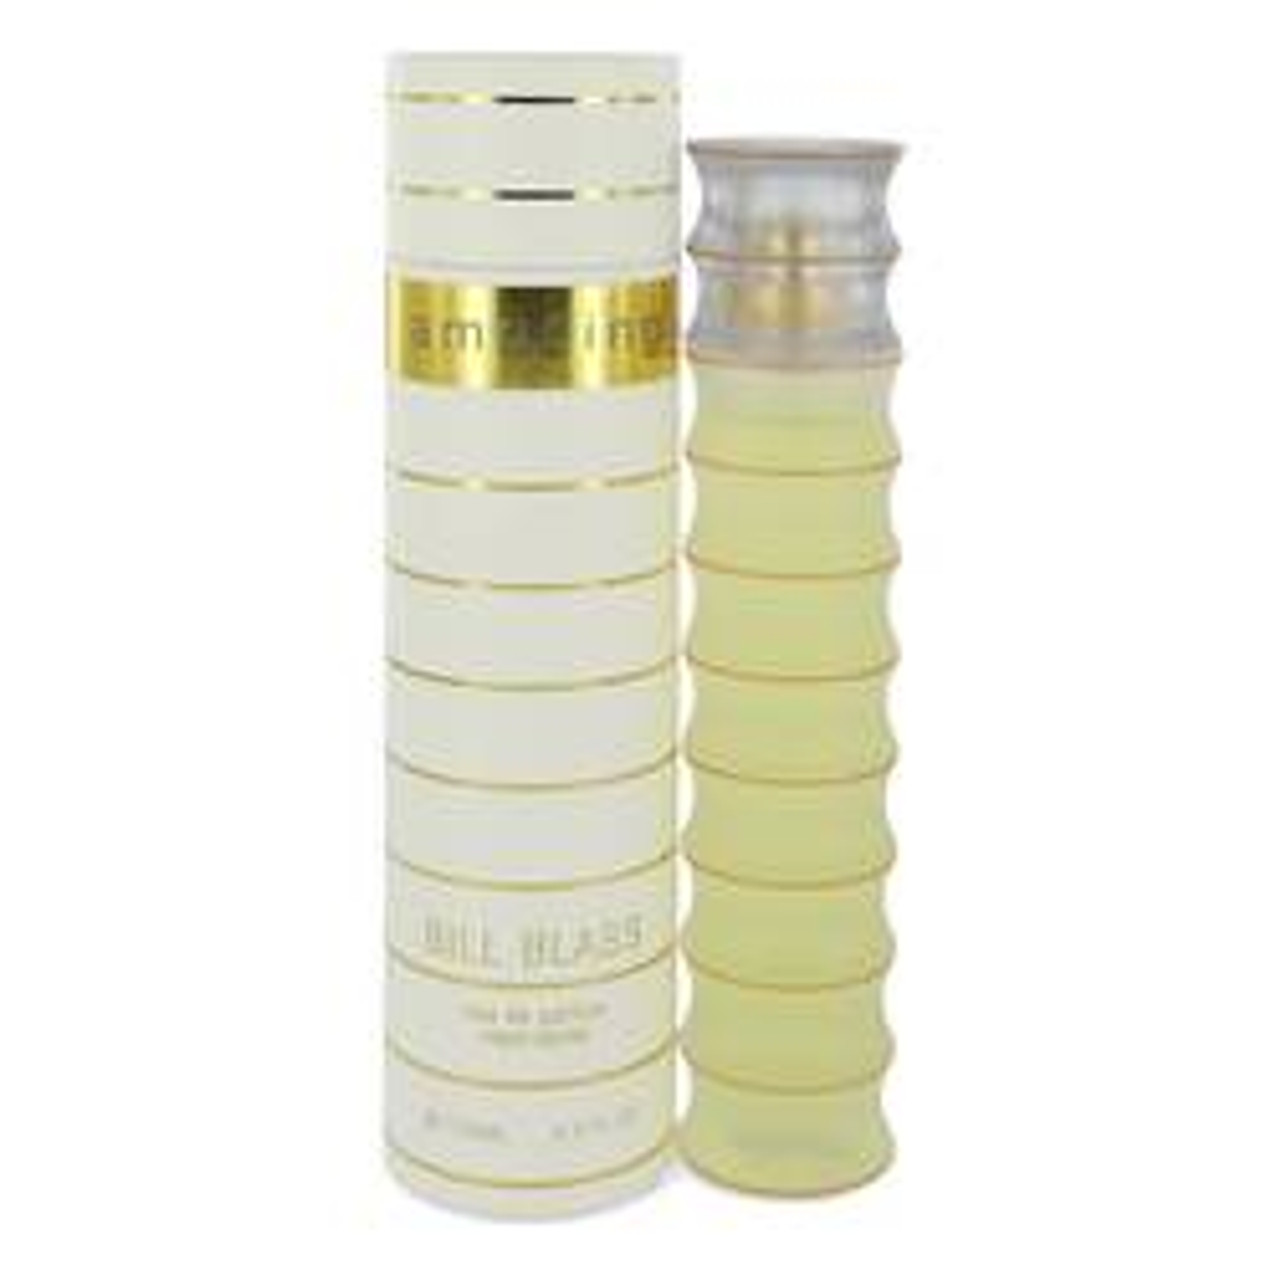 Amazing Perfume By Bill Blass Eau De Parfum Spray 3.4 oz for Women - [From 47.00 - Choose pk Qty ] - *Ships from Miami